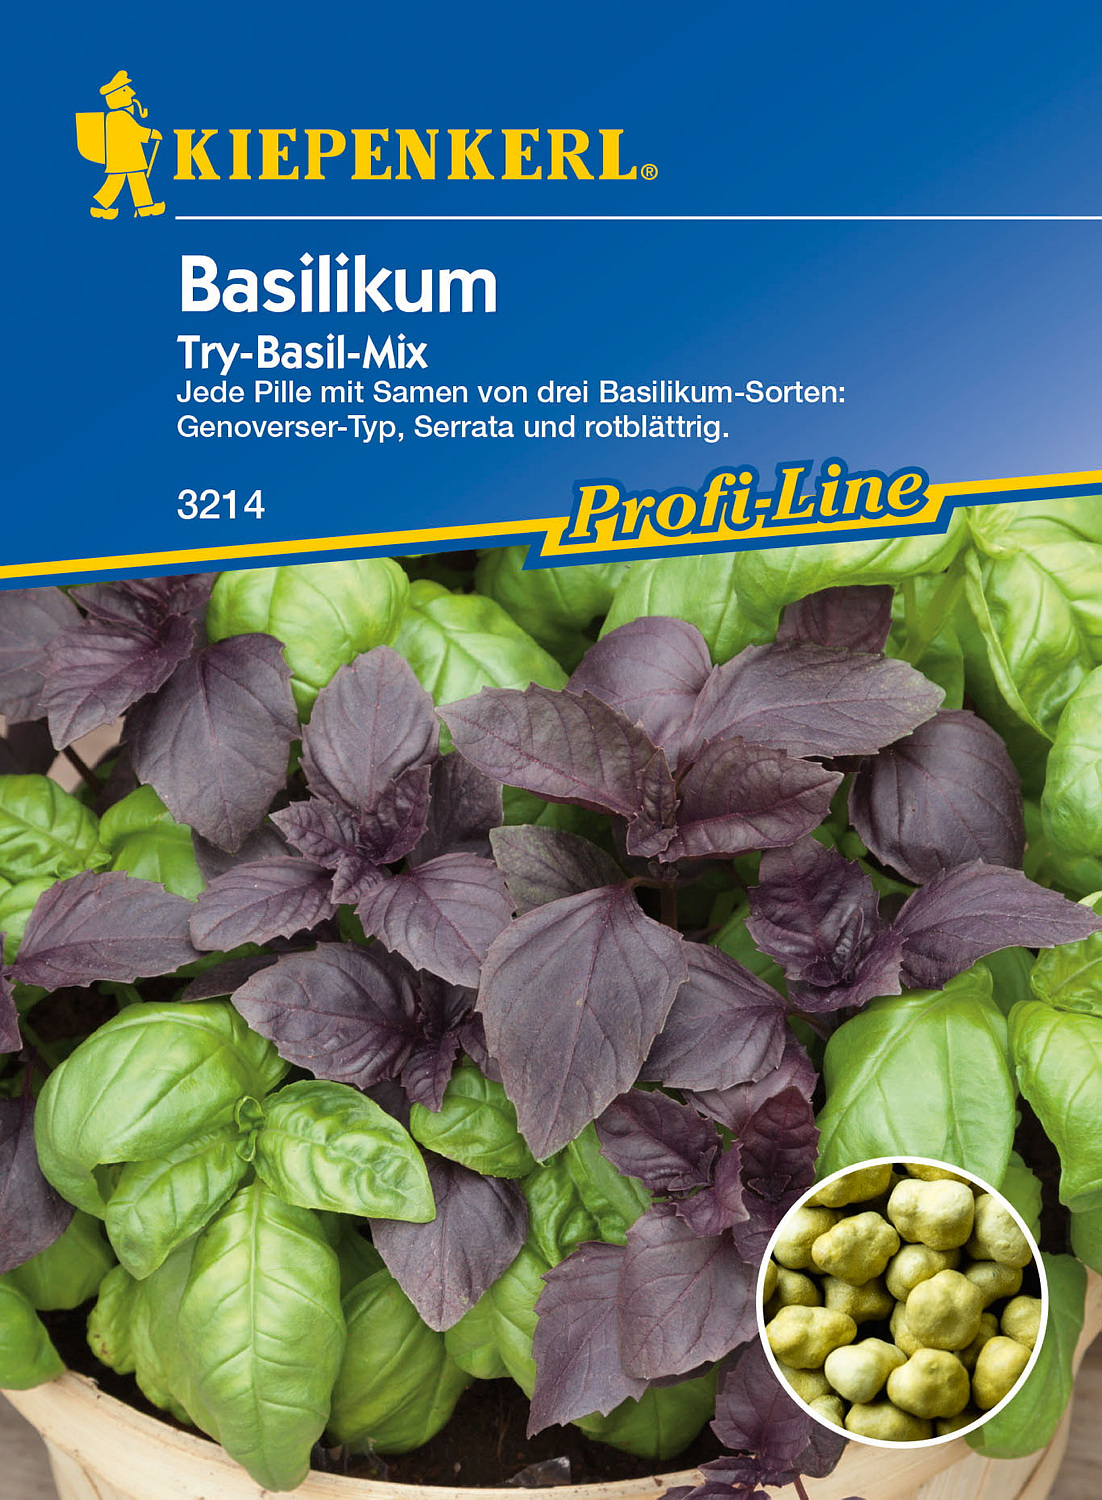 Kiepenkerl® Profi-Line Basilikum Try-Basil-Mix, Pillensaat